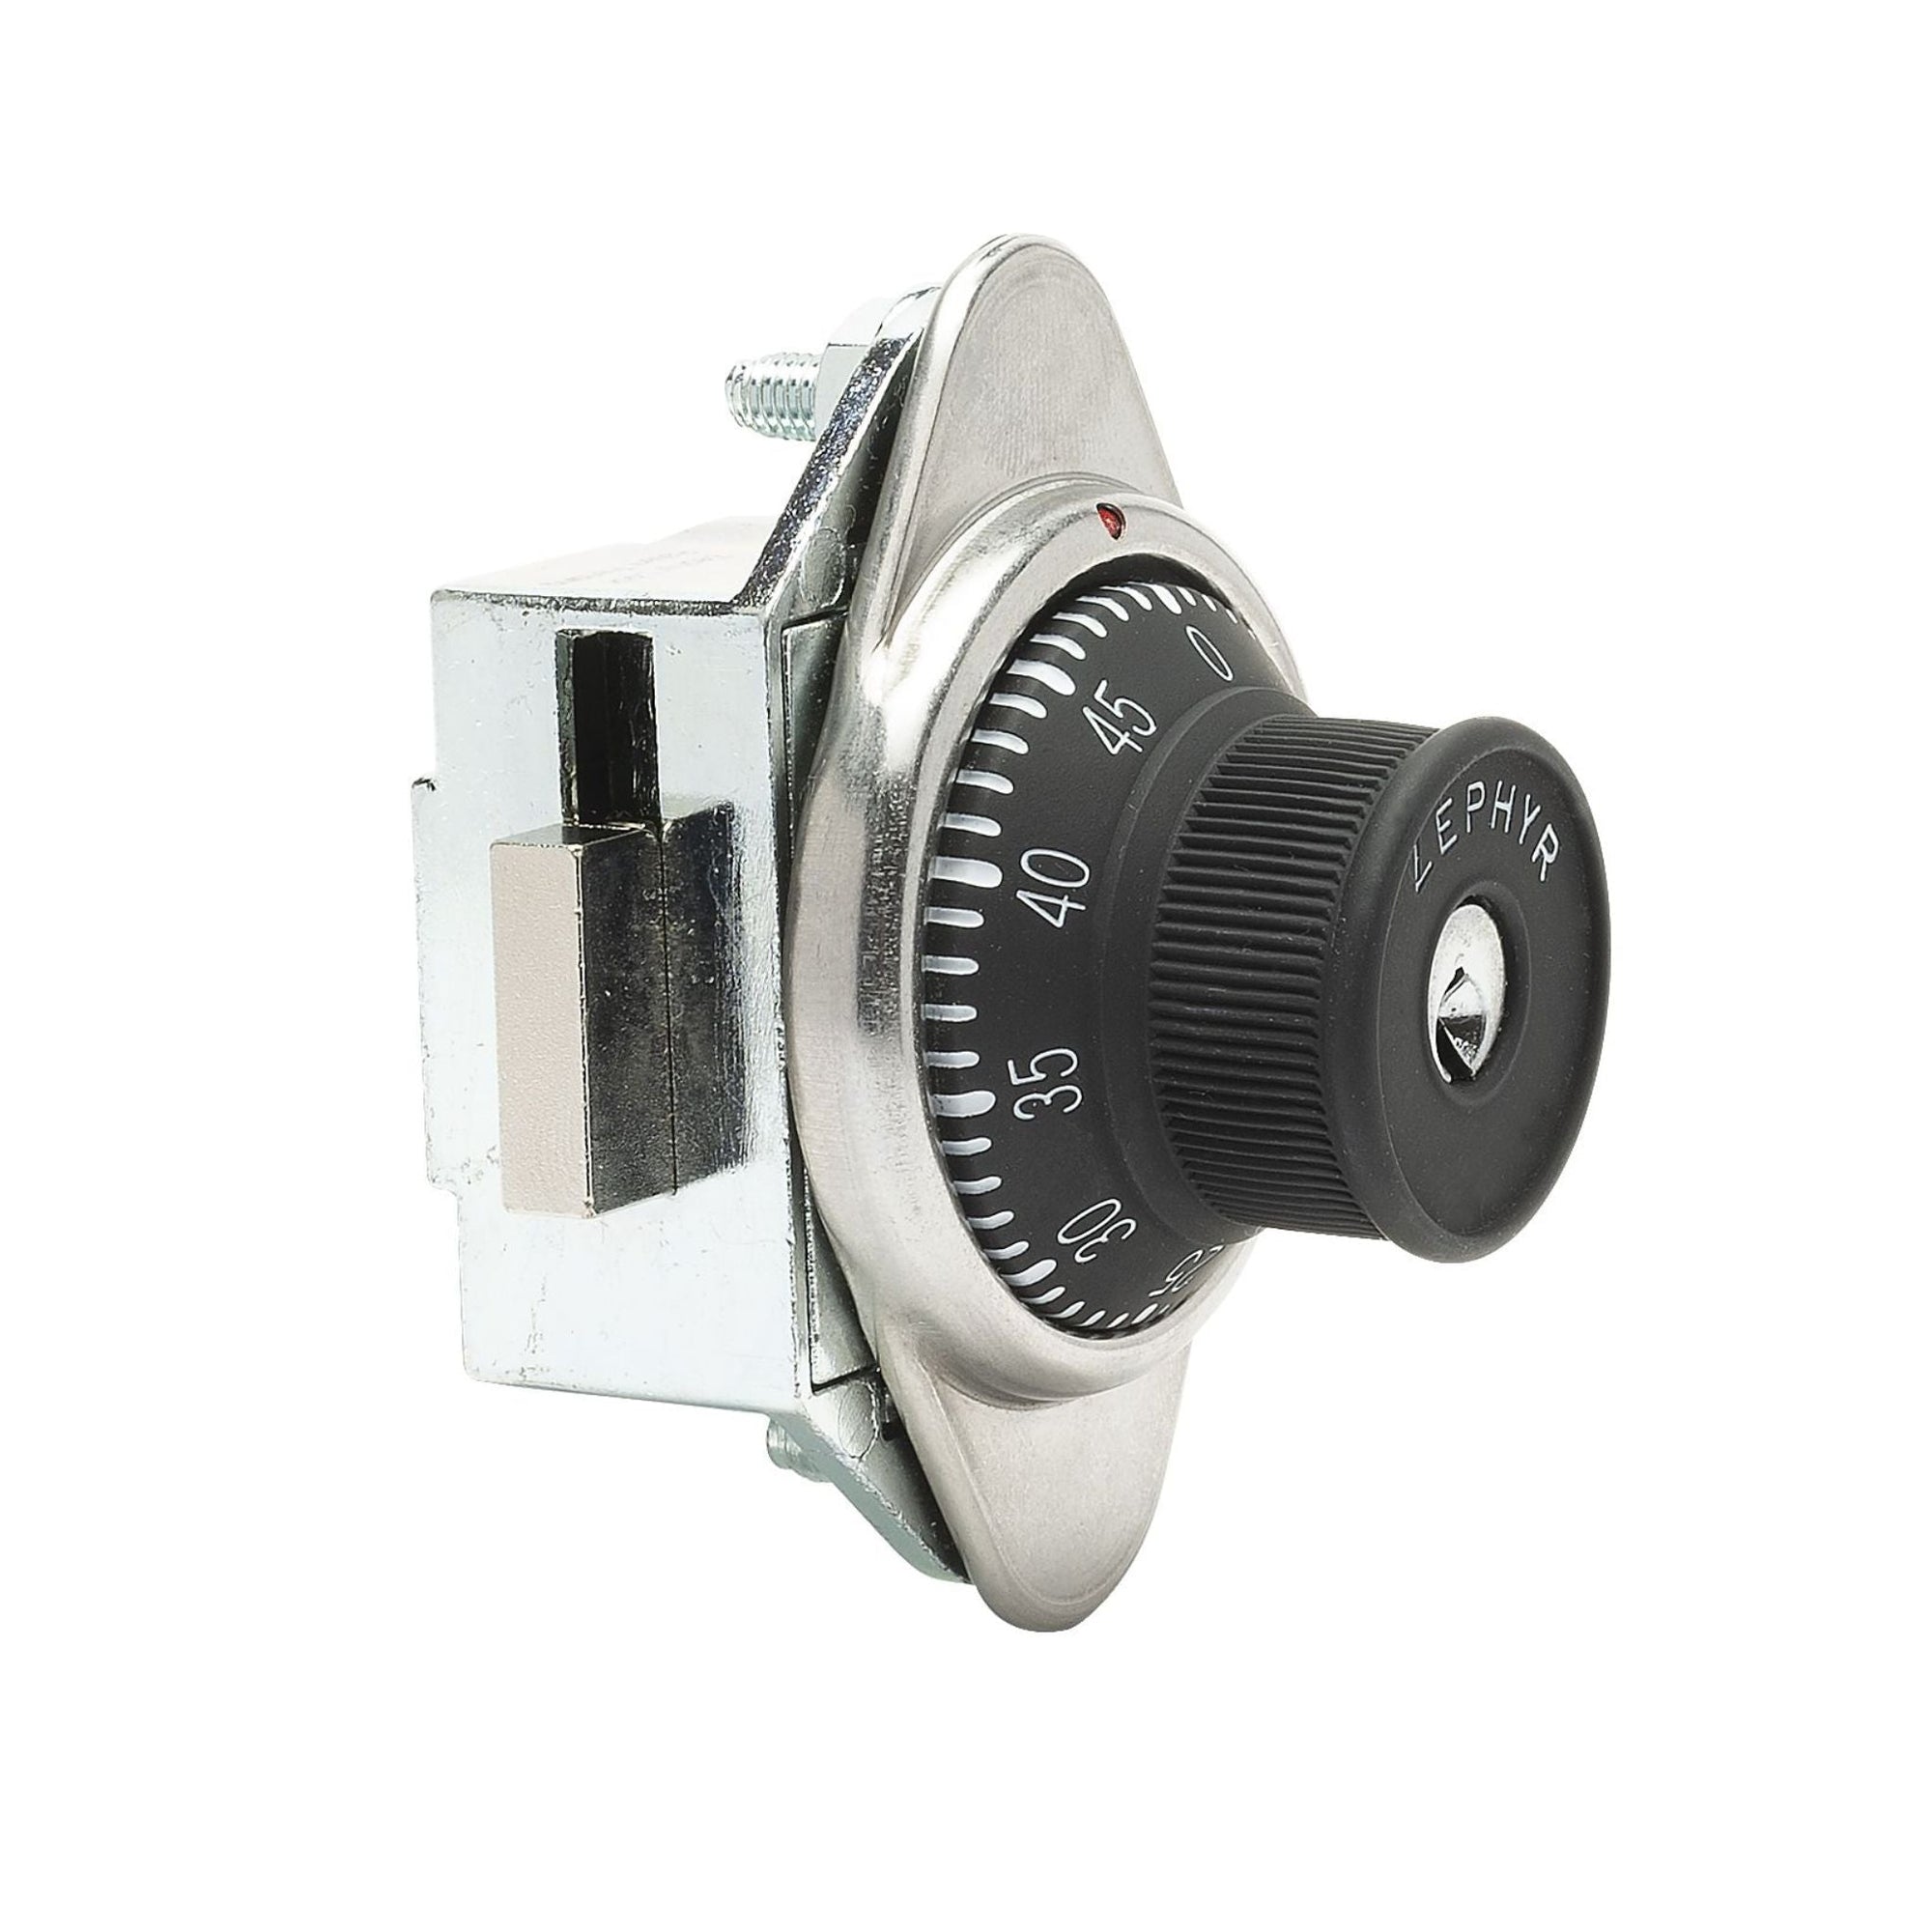 Zephyr Lock 1930 RH Combination Locker Padlock Fits Gravity Style and Multi Point Lockers - The Lock Source